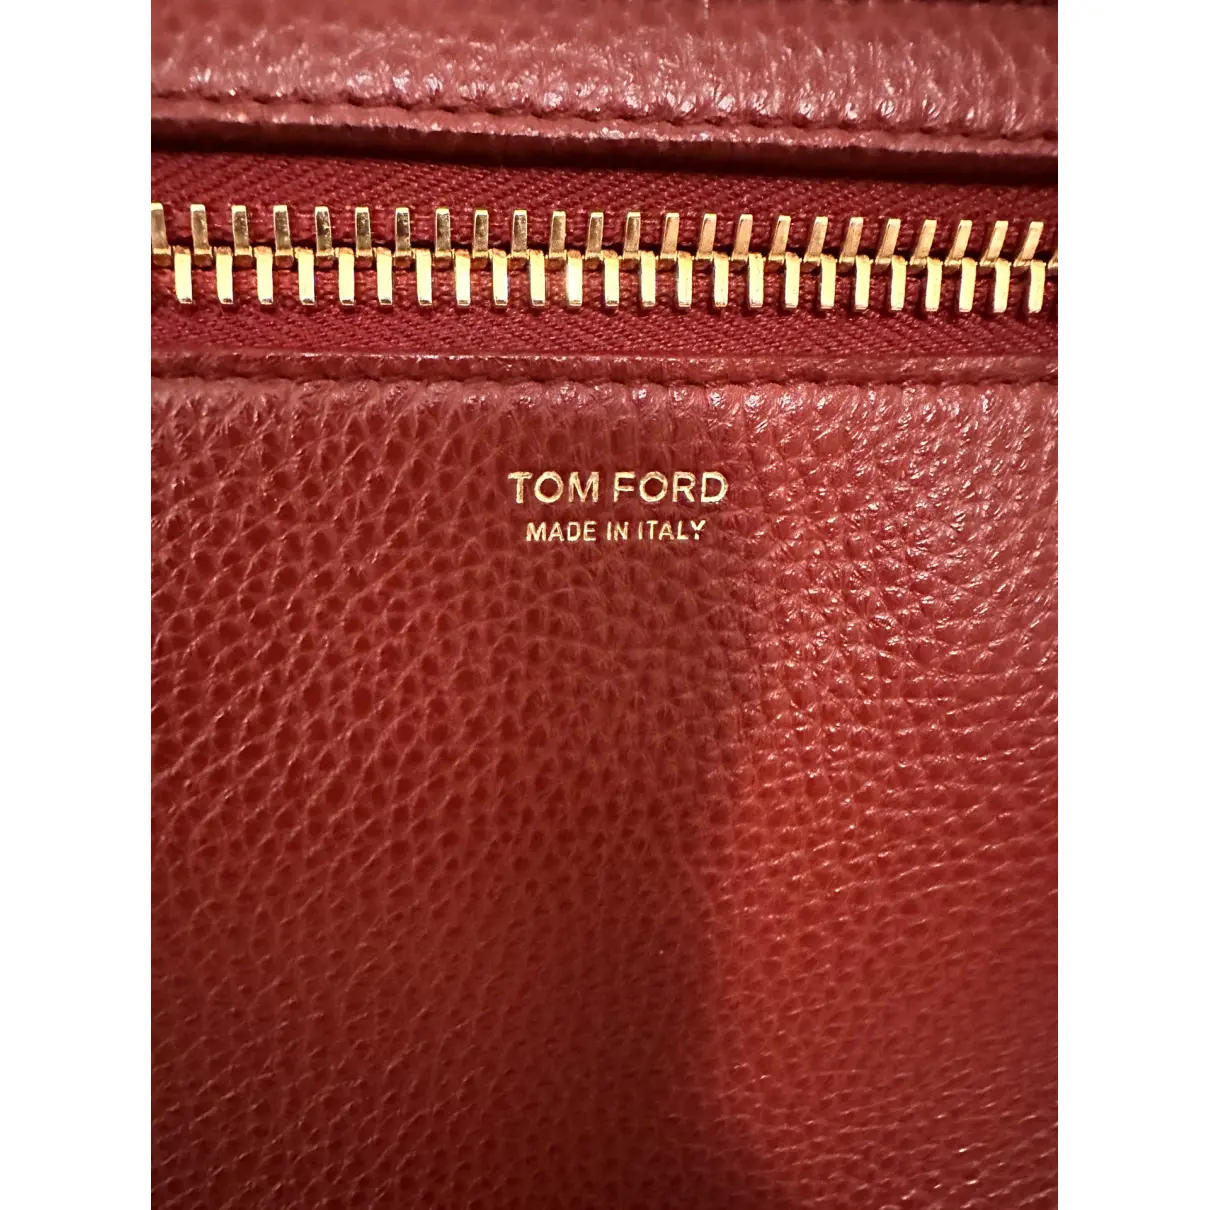 Buy Tom Ford Leather bag online